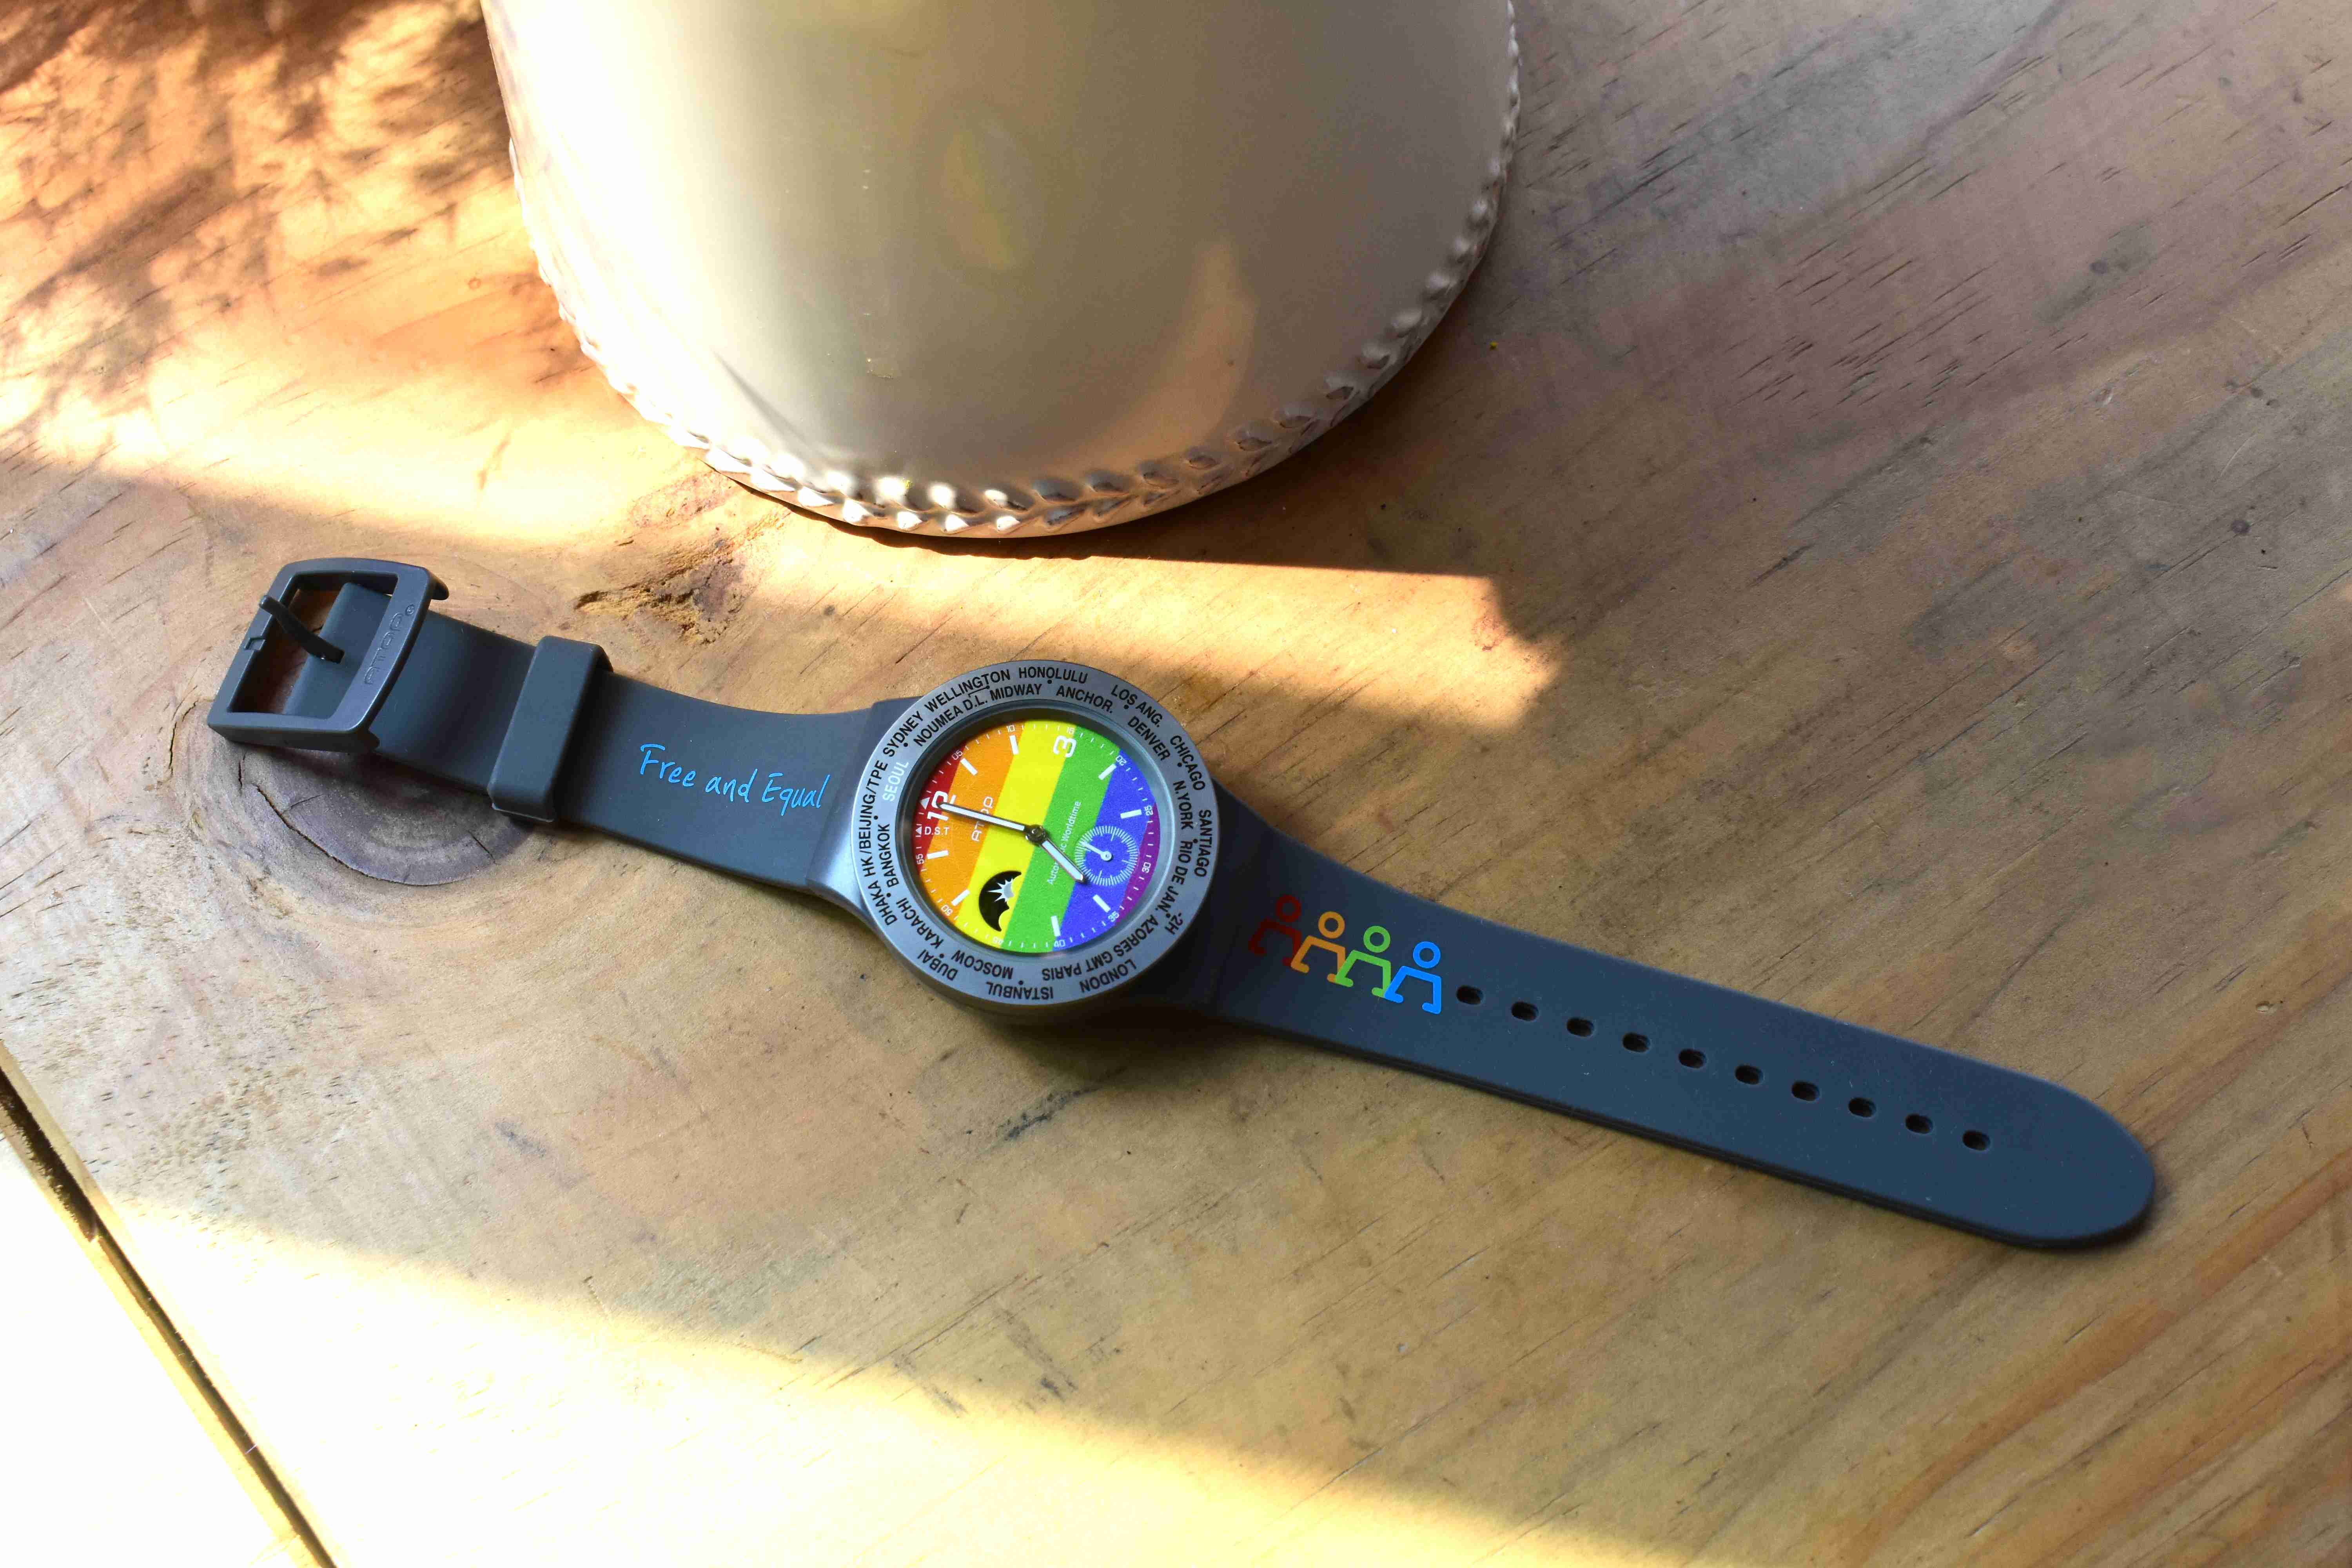 RHIZ 自動時區世界腕錶 - 彩虹旗限定版 - 灰